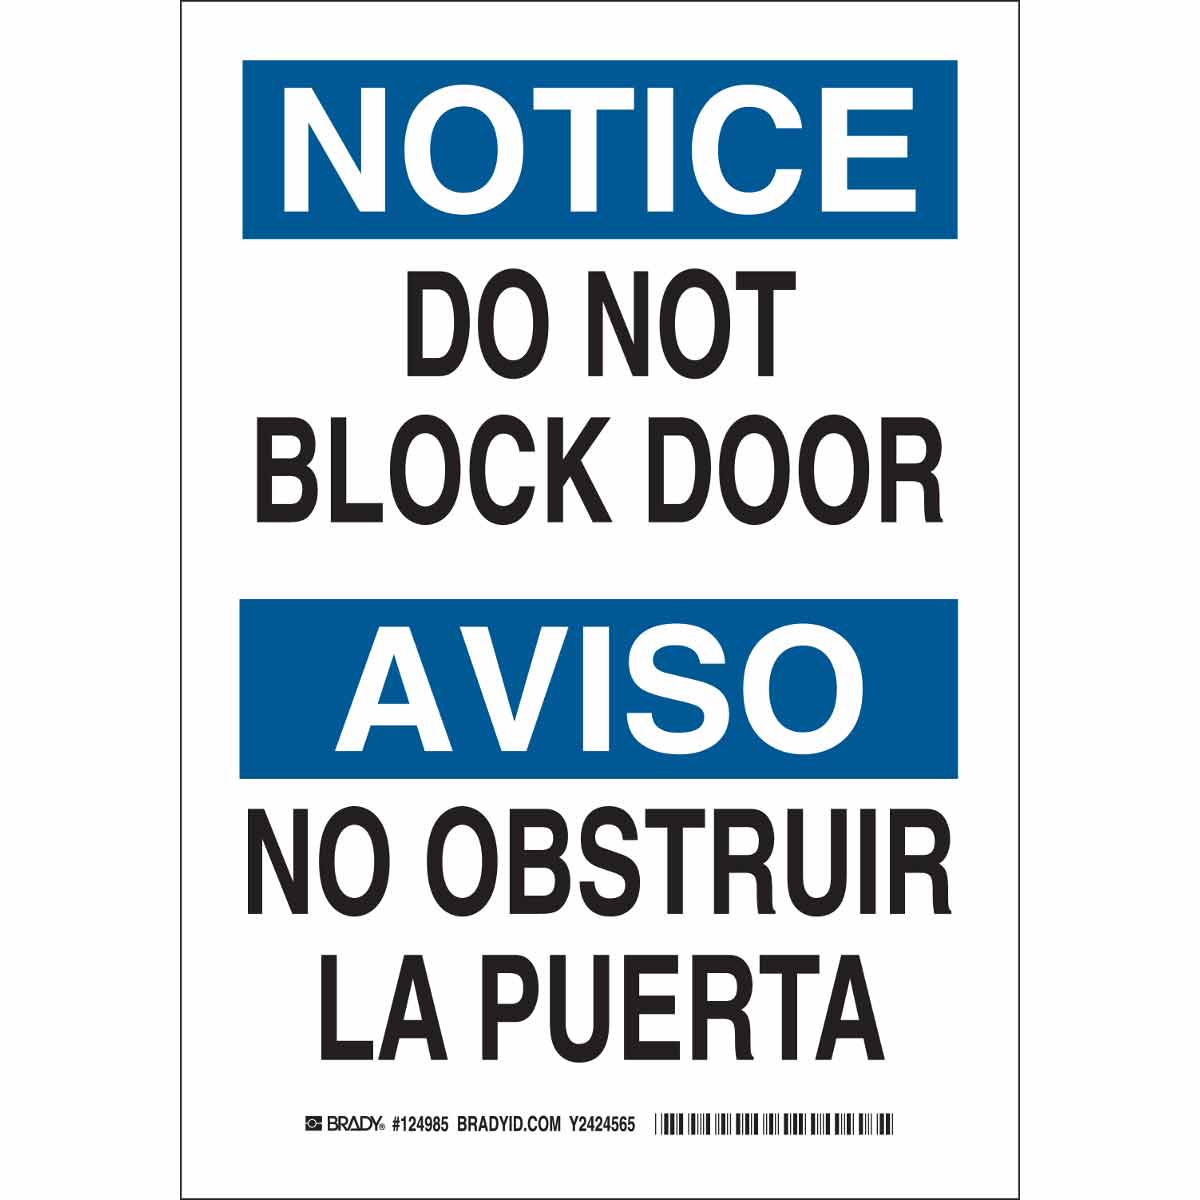 10 Width 14 Height Black and Blue on White LegendDo Not Block Door/No Obstruir La Puerta 14 Height 10 Width LegendDo Not Block Door/No Obstruir La Puerta Brady 124988 Bilingual Sign 